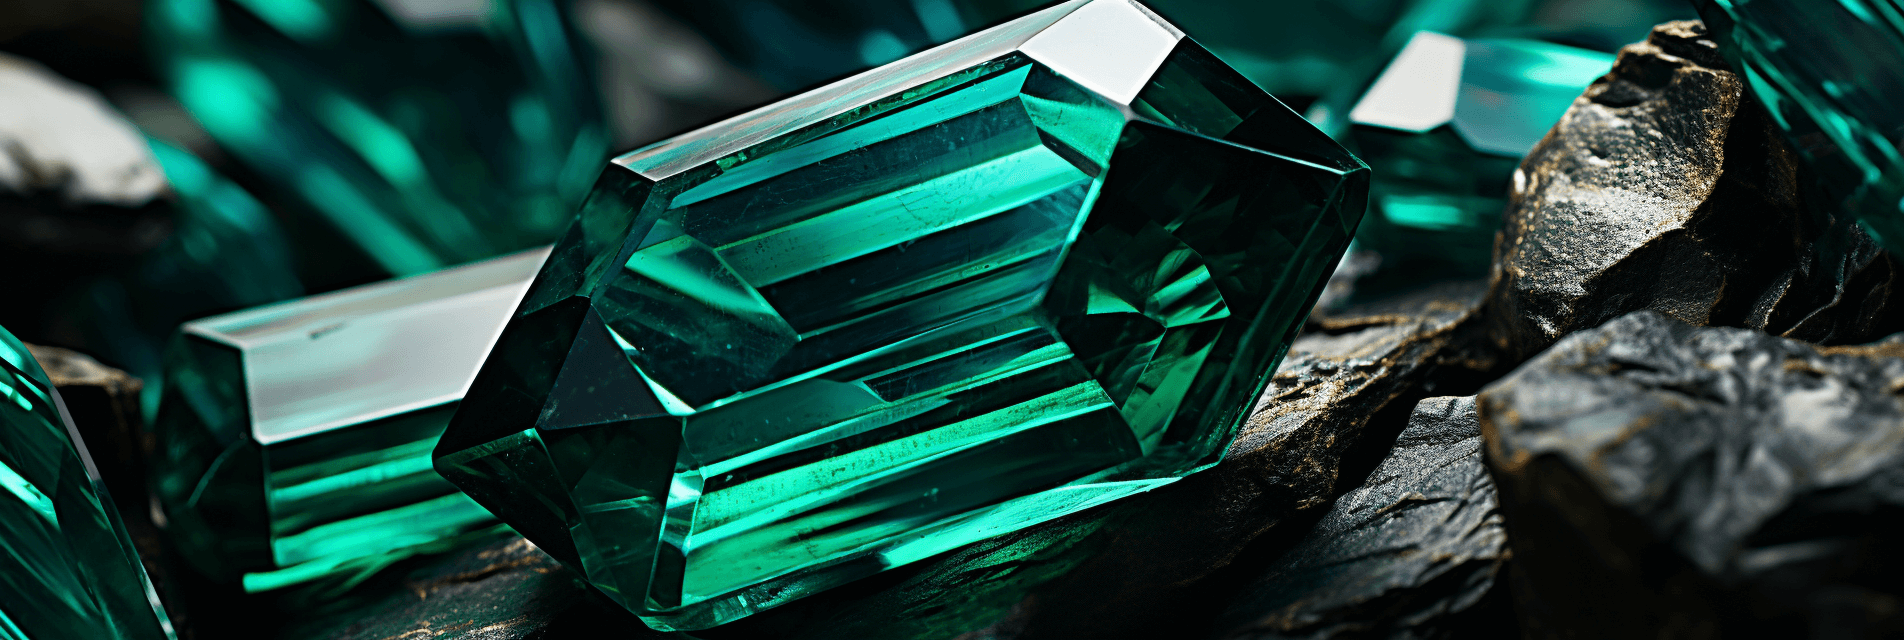 Close Up of Emerald